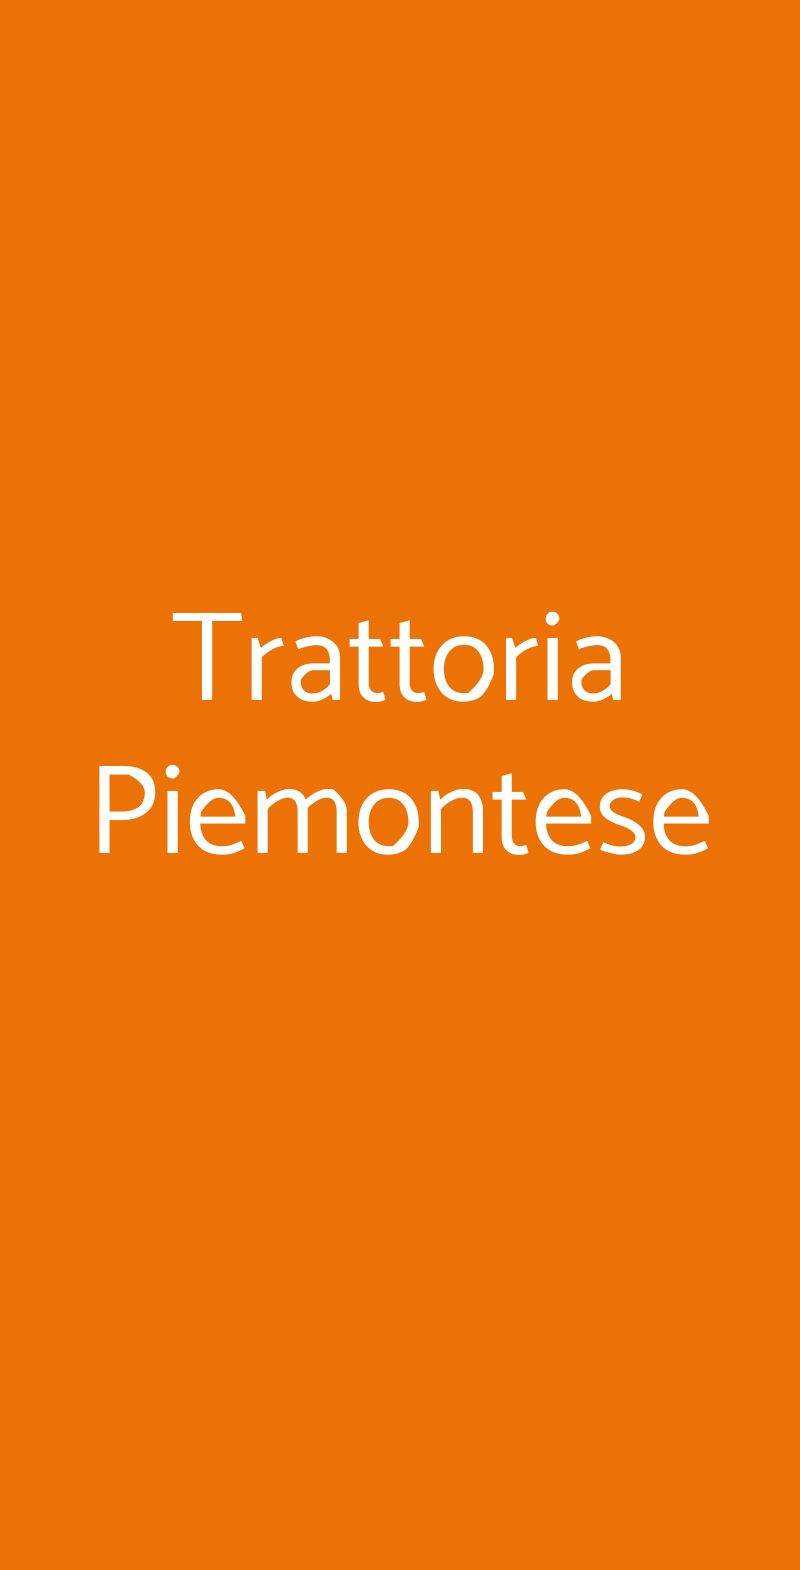 Trattoria Piemontese Torino menù 1 pagina